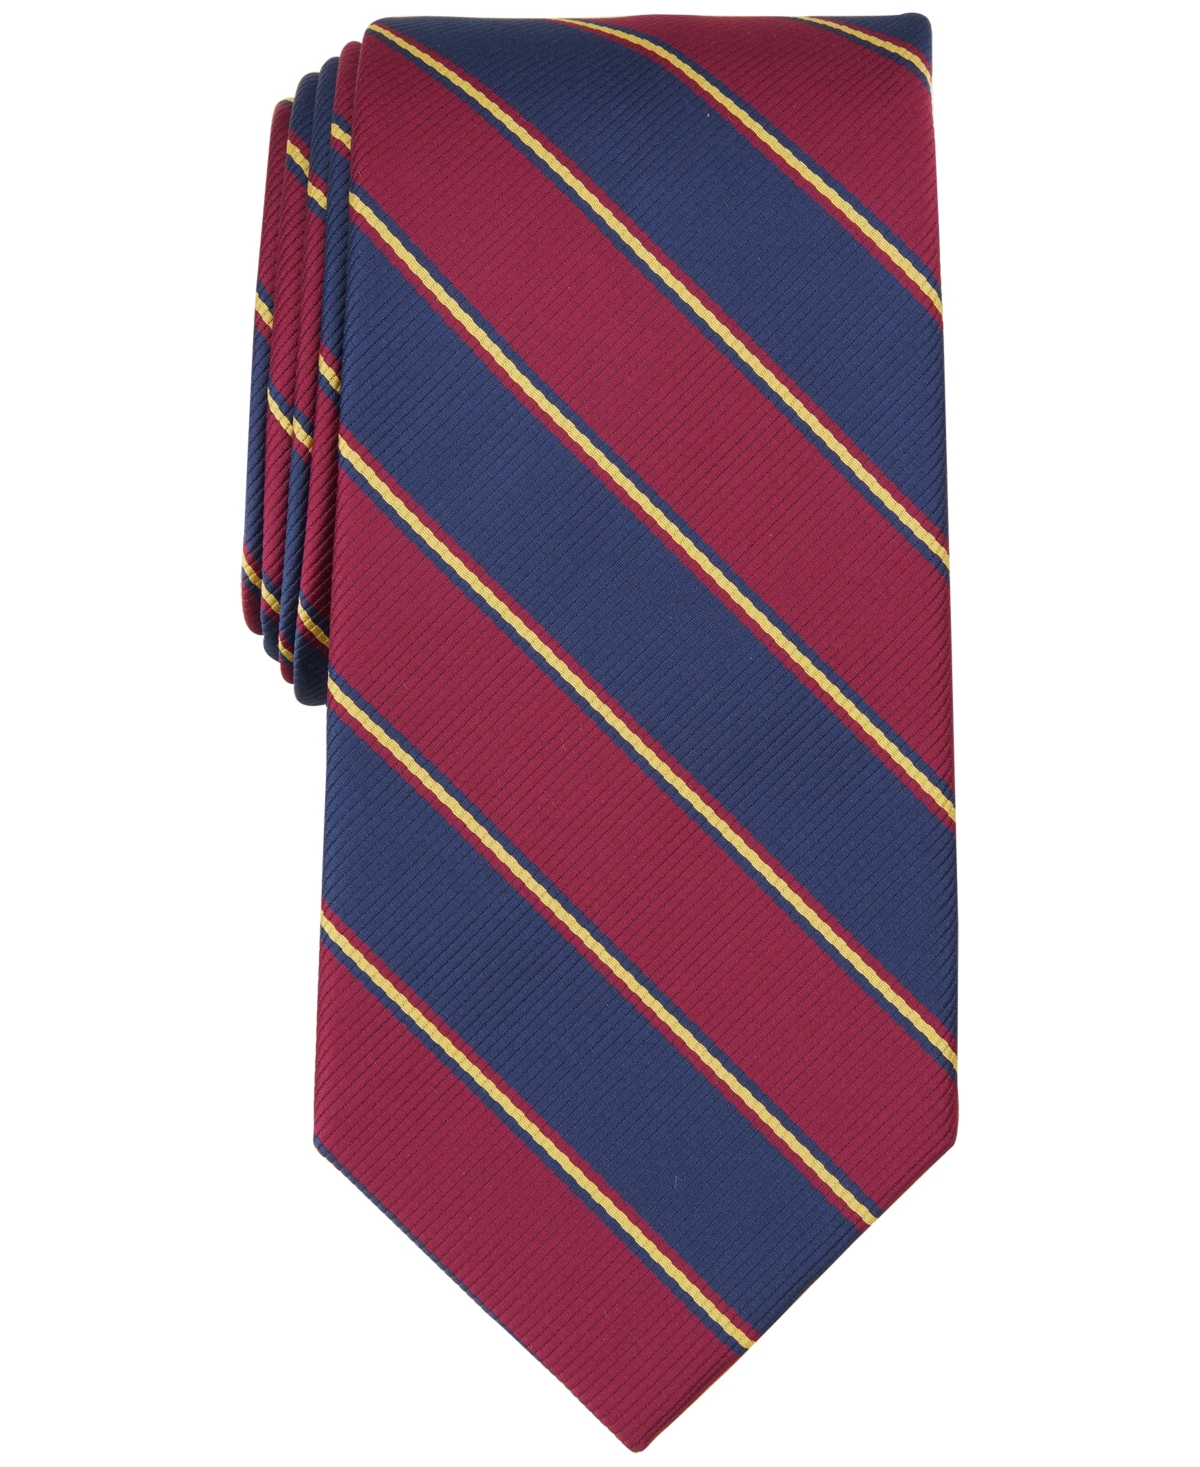 Men's Troutman Stripe Tie, Created for Macy's - Navy